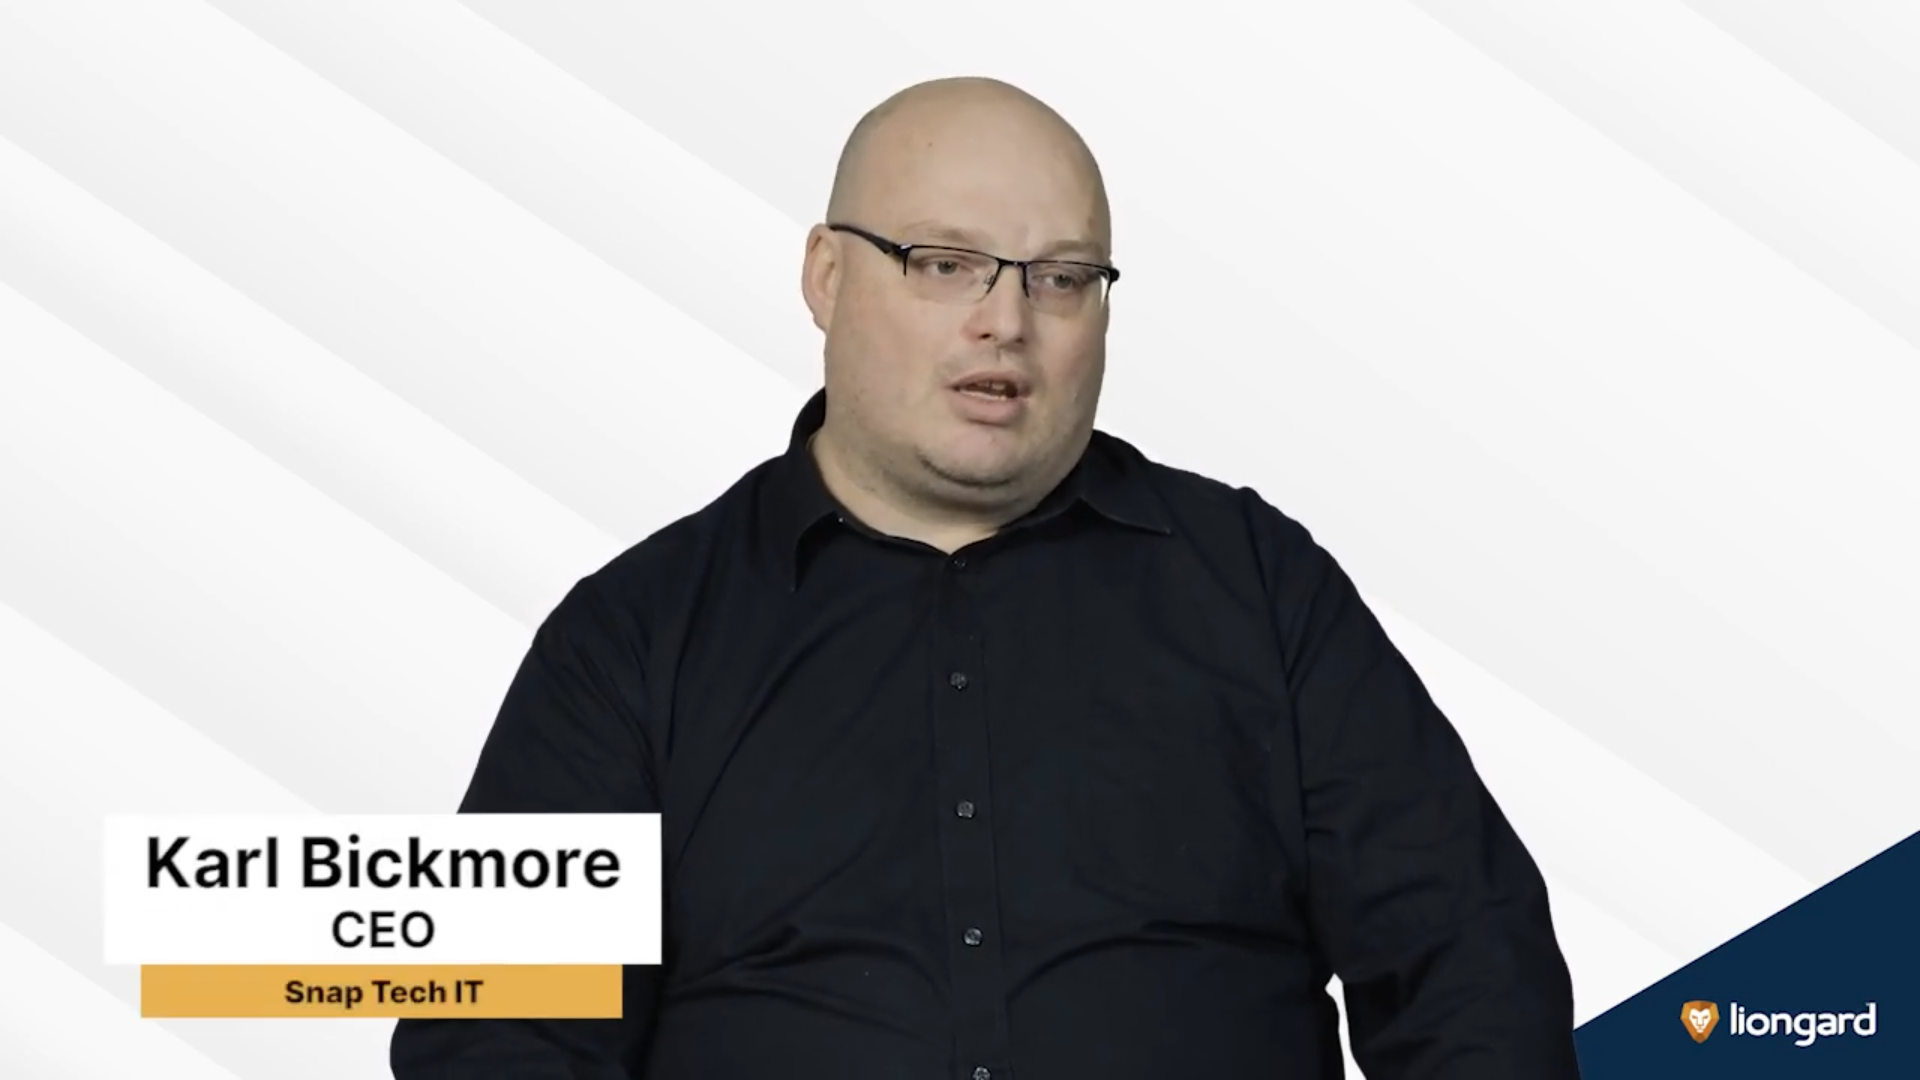 Video testimonial still of Karl Bickmore, CEO of Snap Tech IT